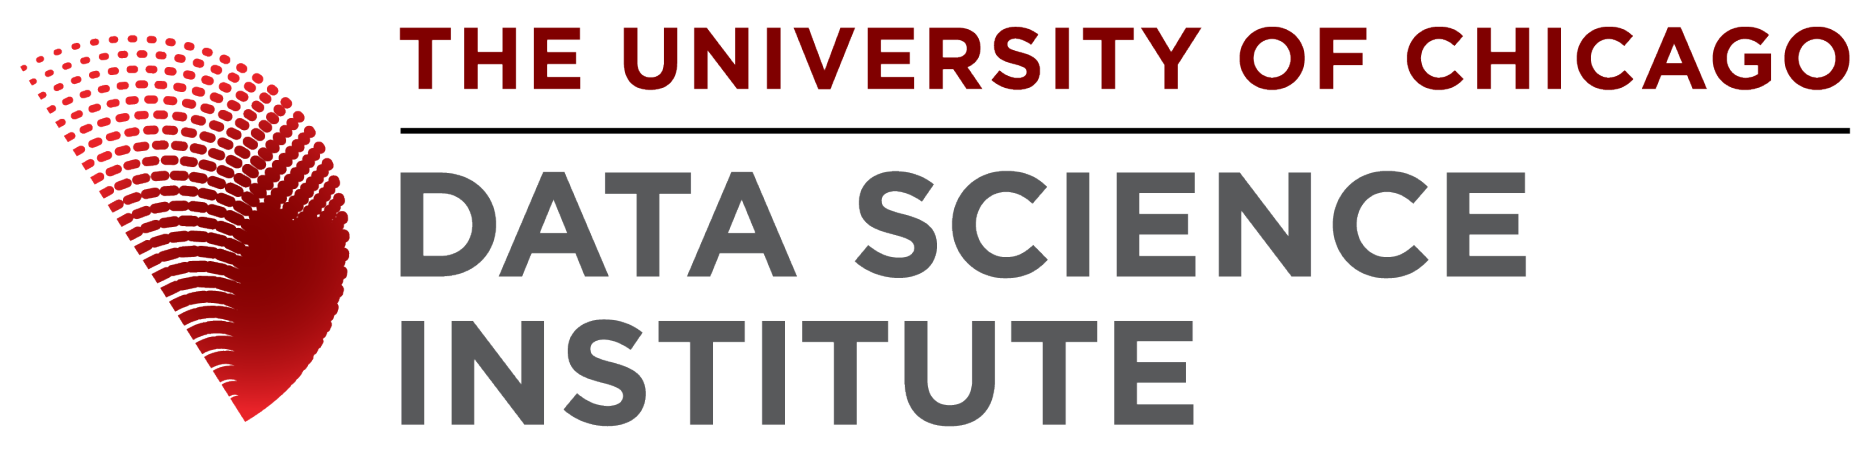 The University of Chicago, Data Science Institute